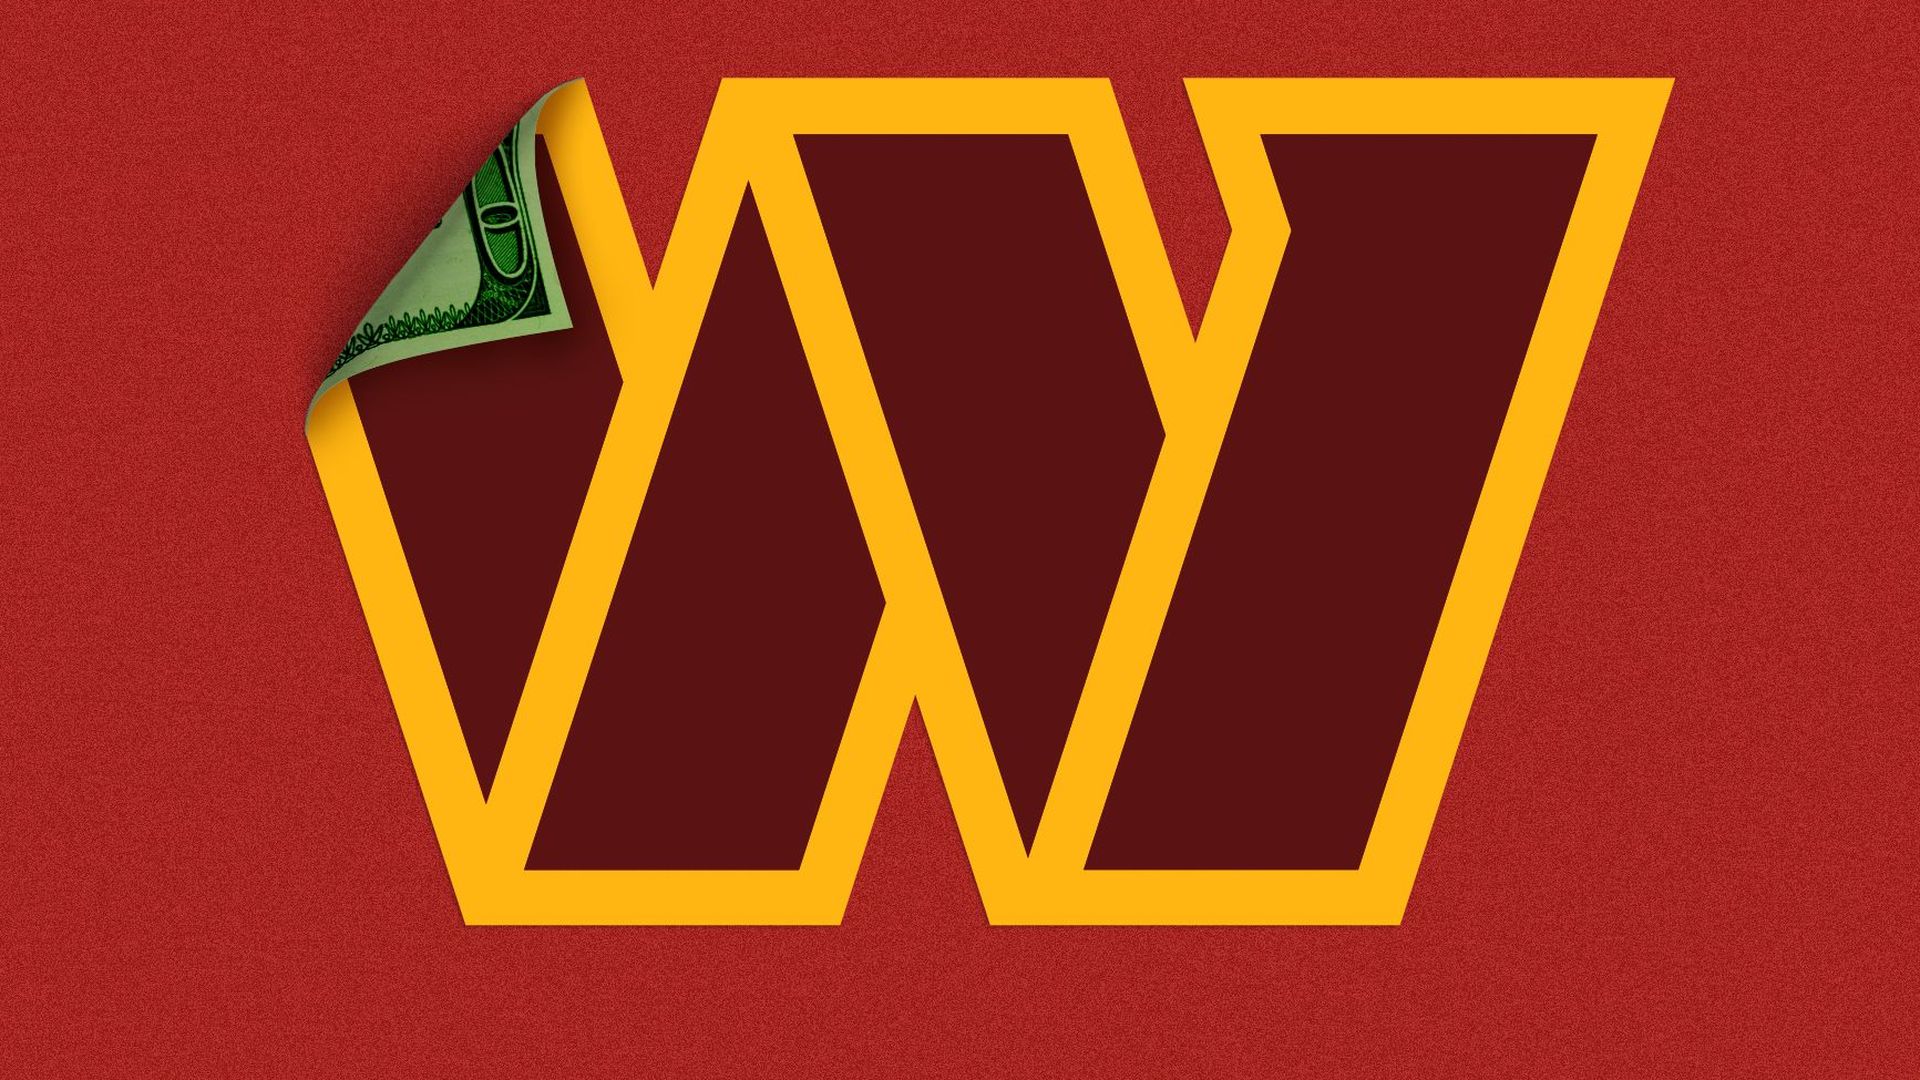 Illustration of the Washington Commander's logo peeling back to reveal a hundred dollar bill on the reverse side.